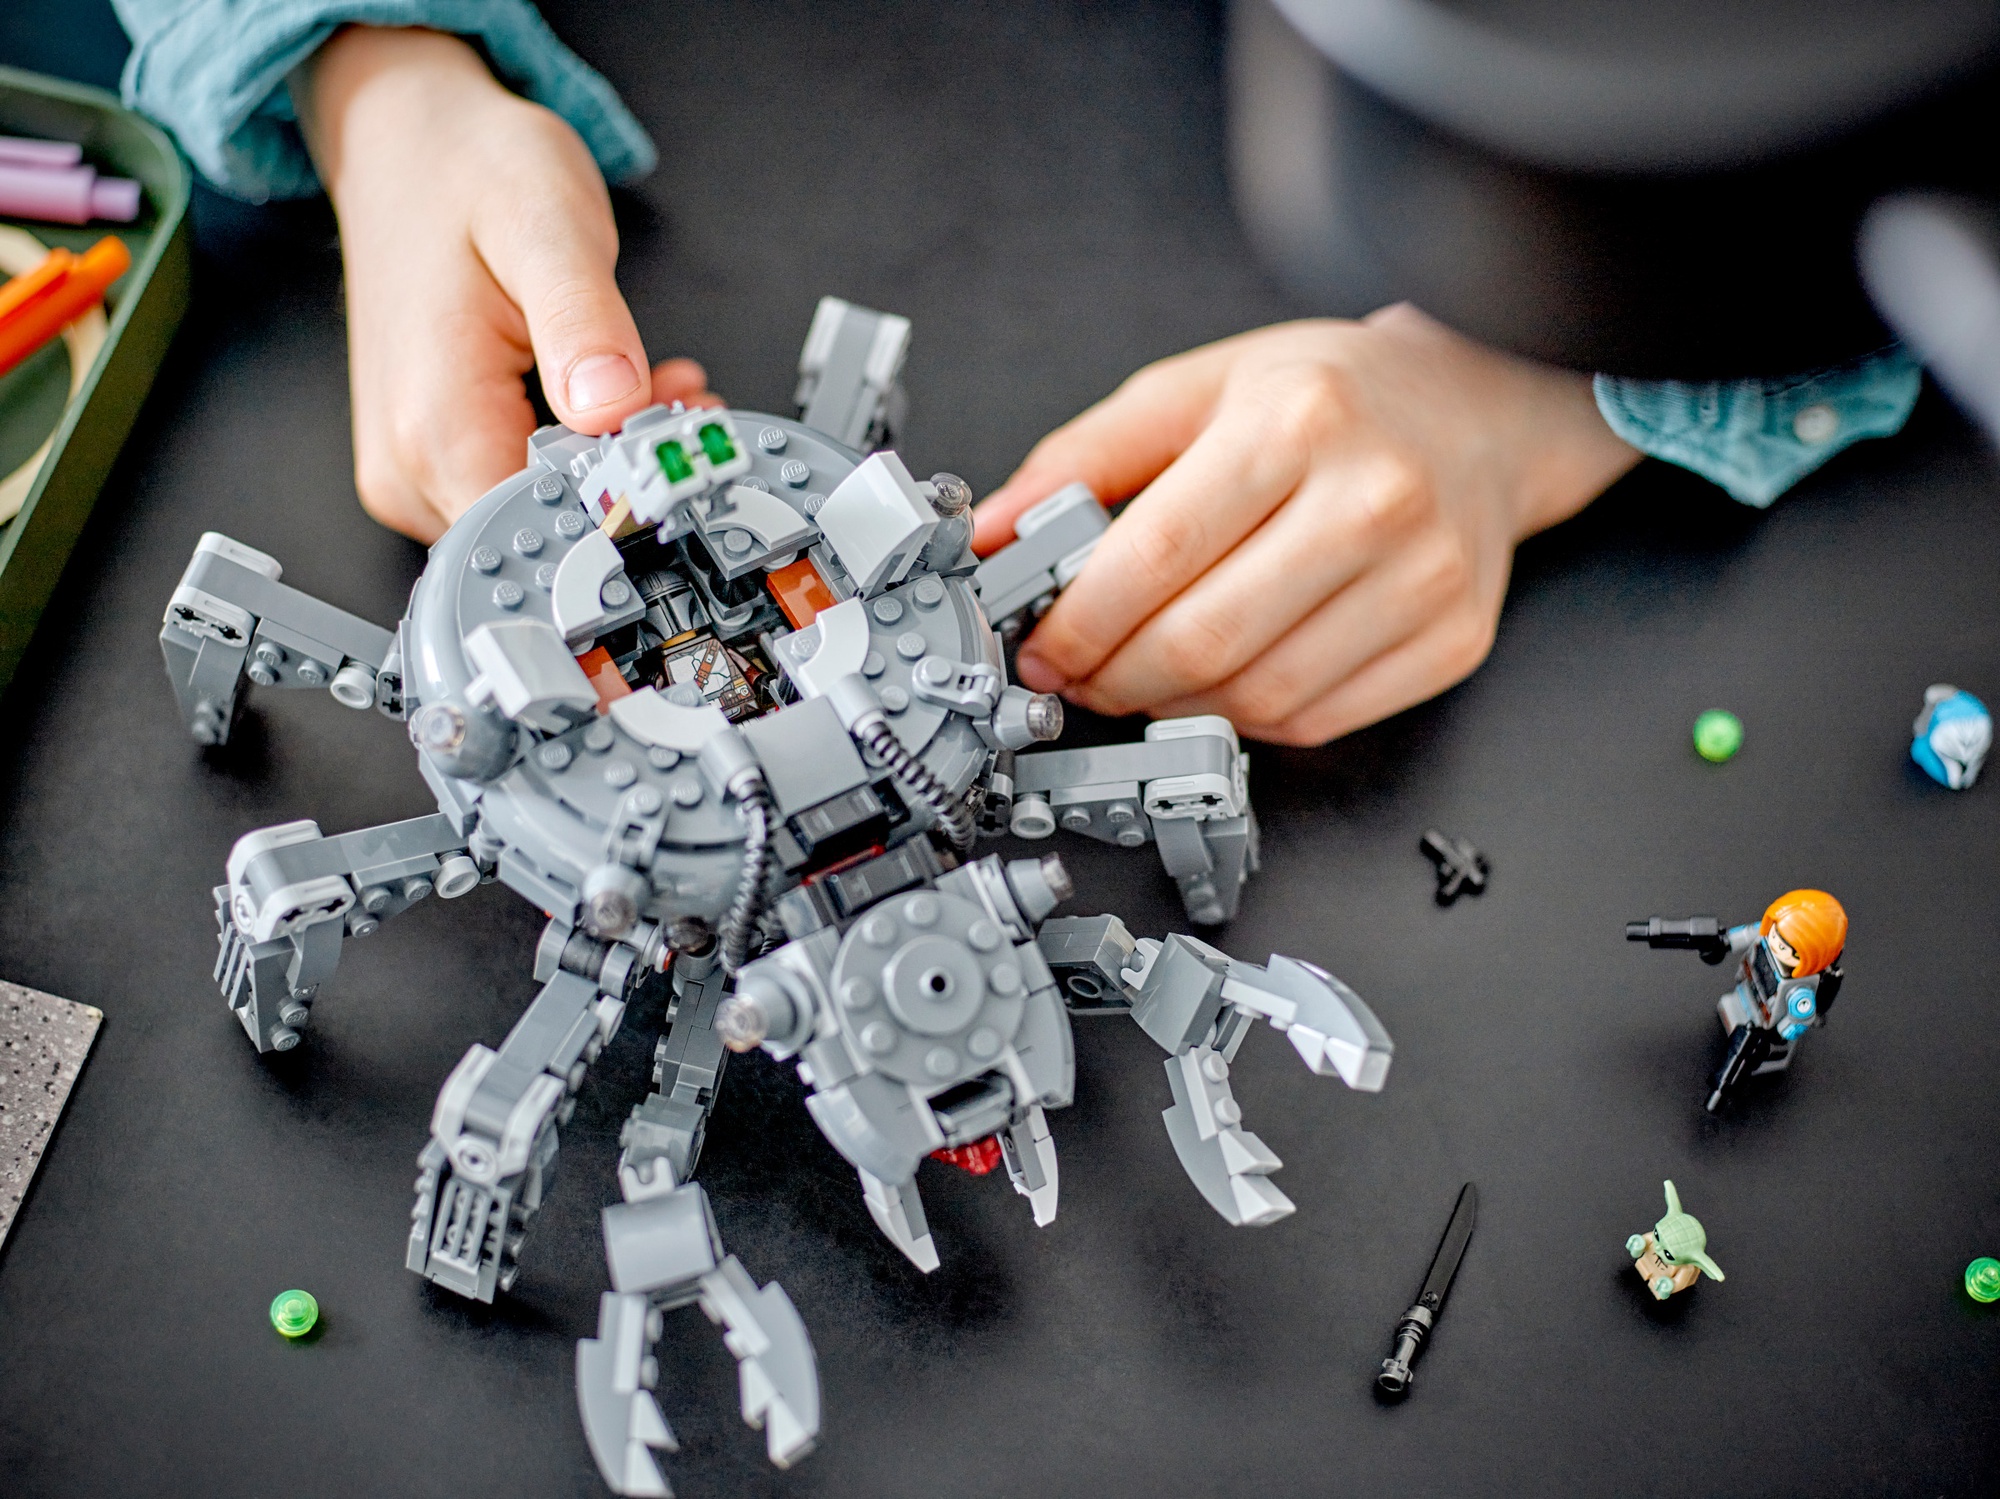 LEGO Star Wars™ Mandalorian Spider Tank 75361 Building Set (526